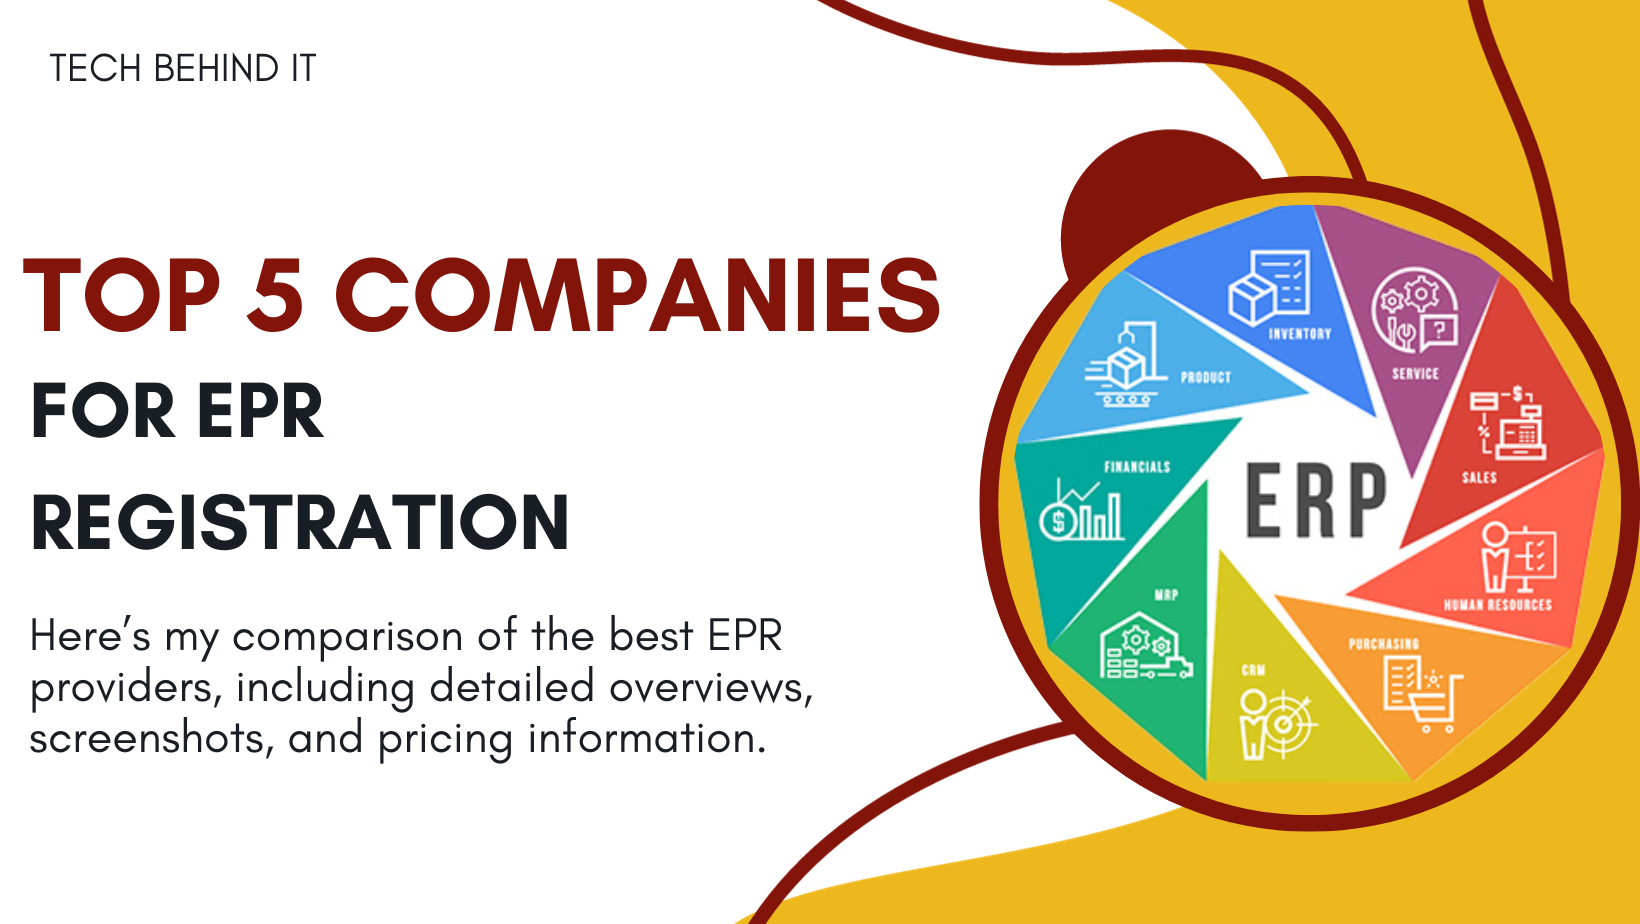 Top 5 Companies for EPR Registration